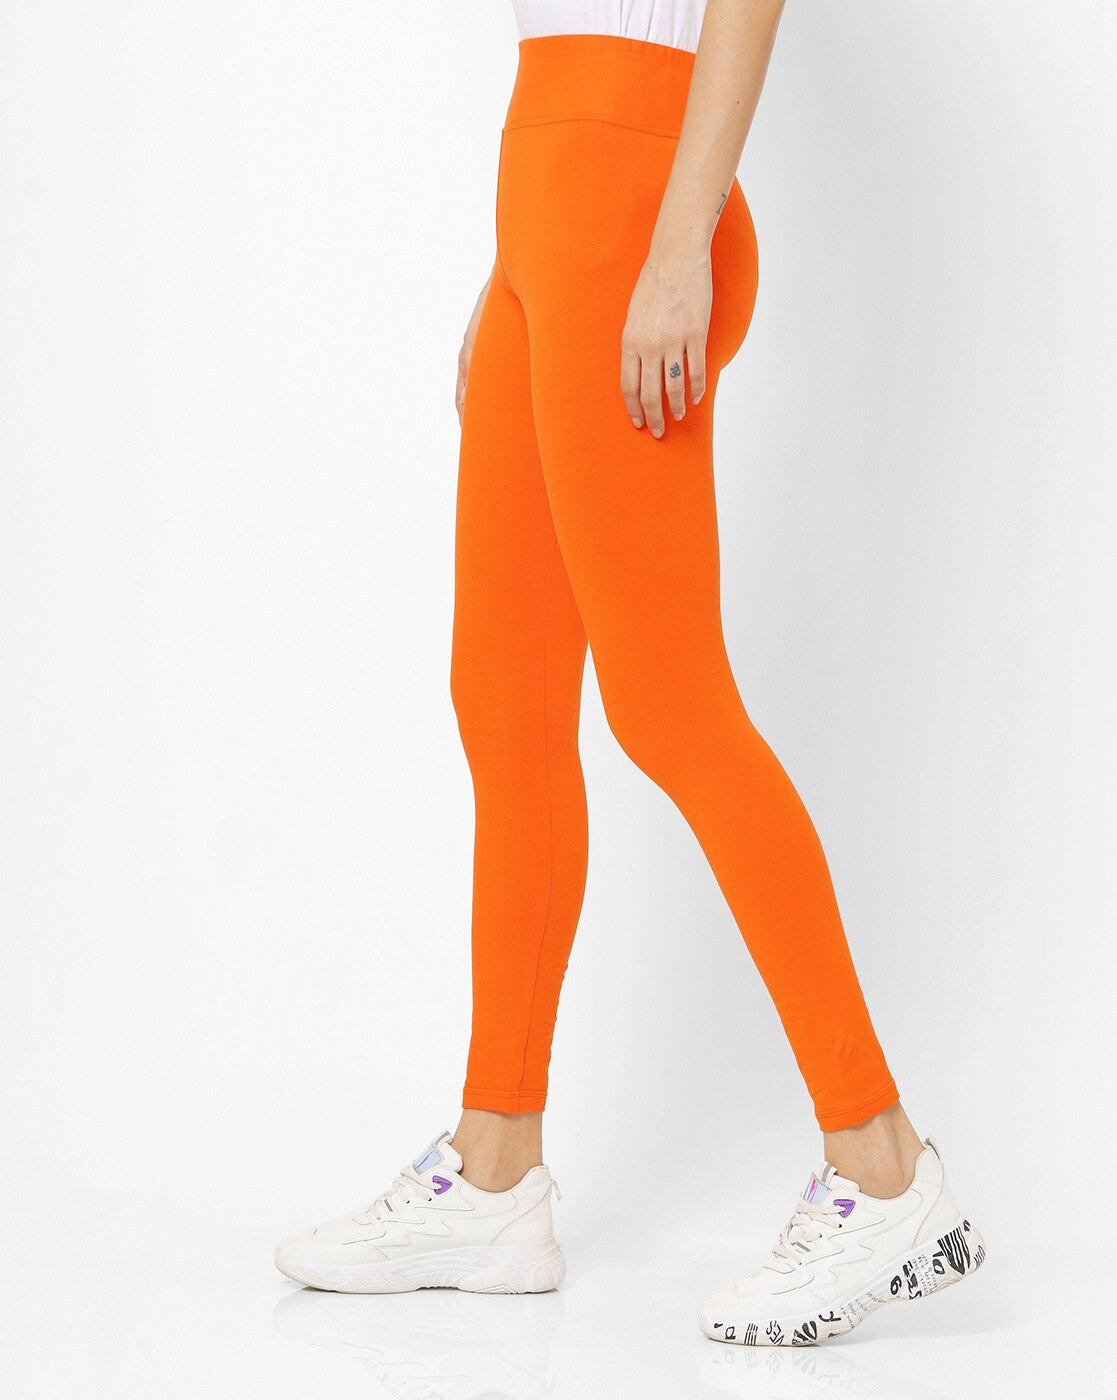 Buy Fashion360 Women's Orange Hosiery Cotton Churidar Leggings Extra Large  - XL at Amazon.in